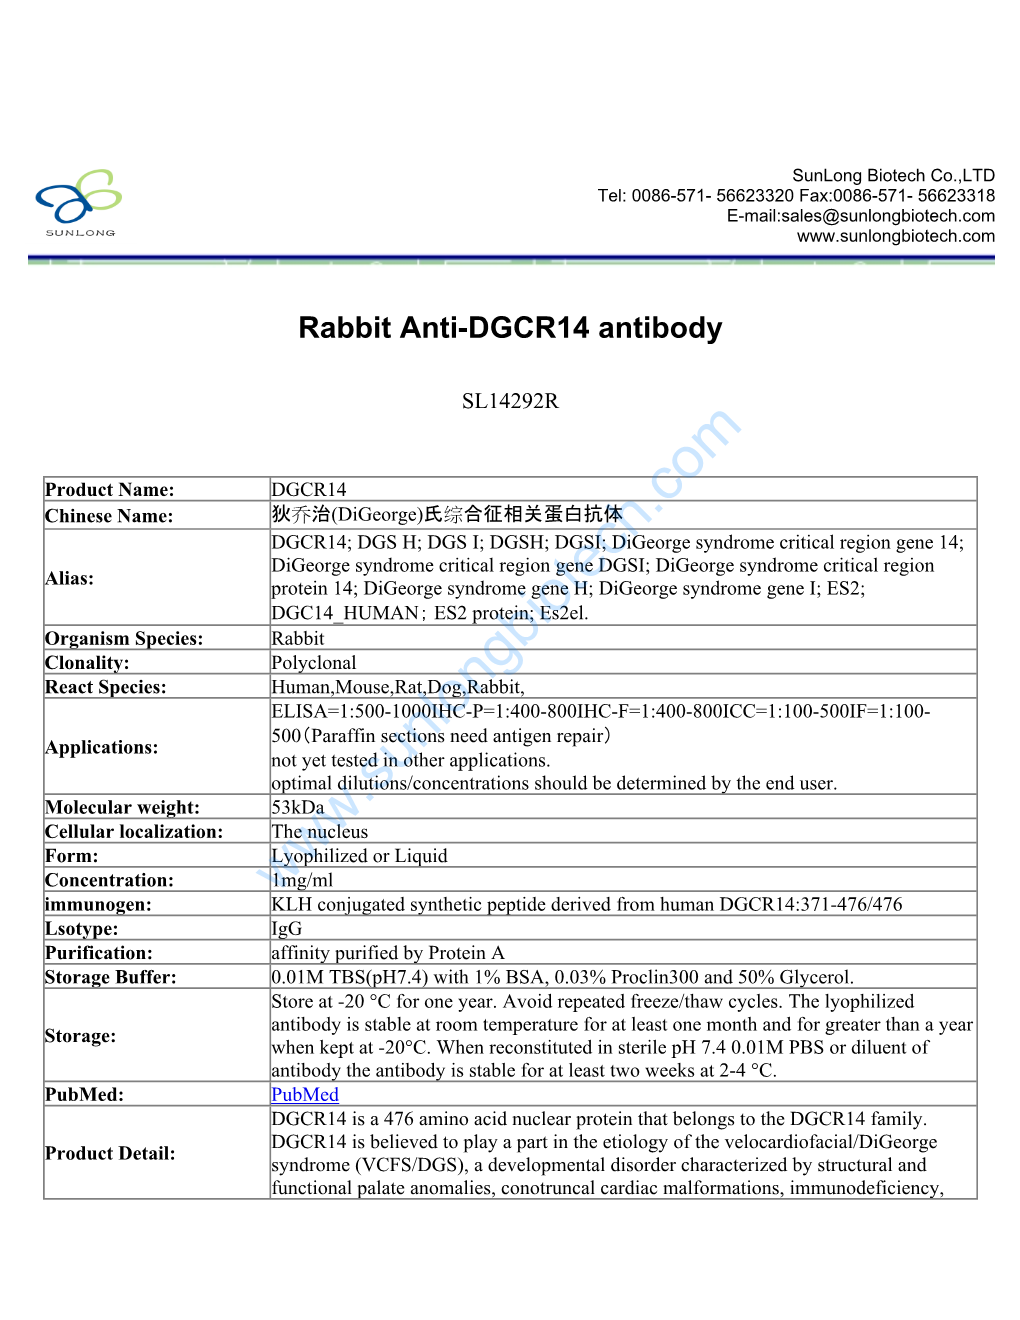 Rabbit Anti-DGCR14 Antibody-SL14292R